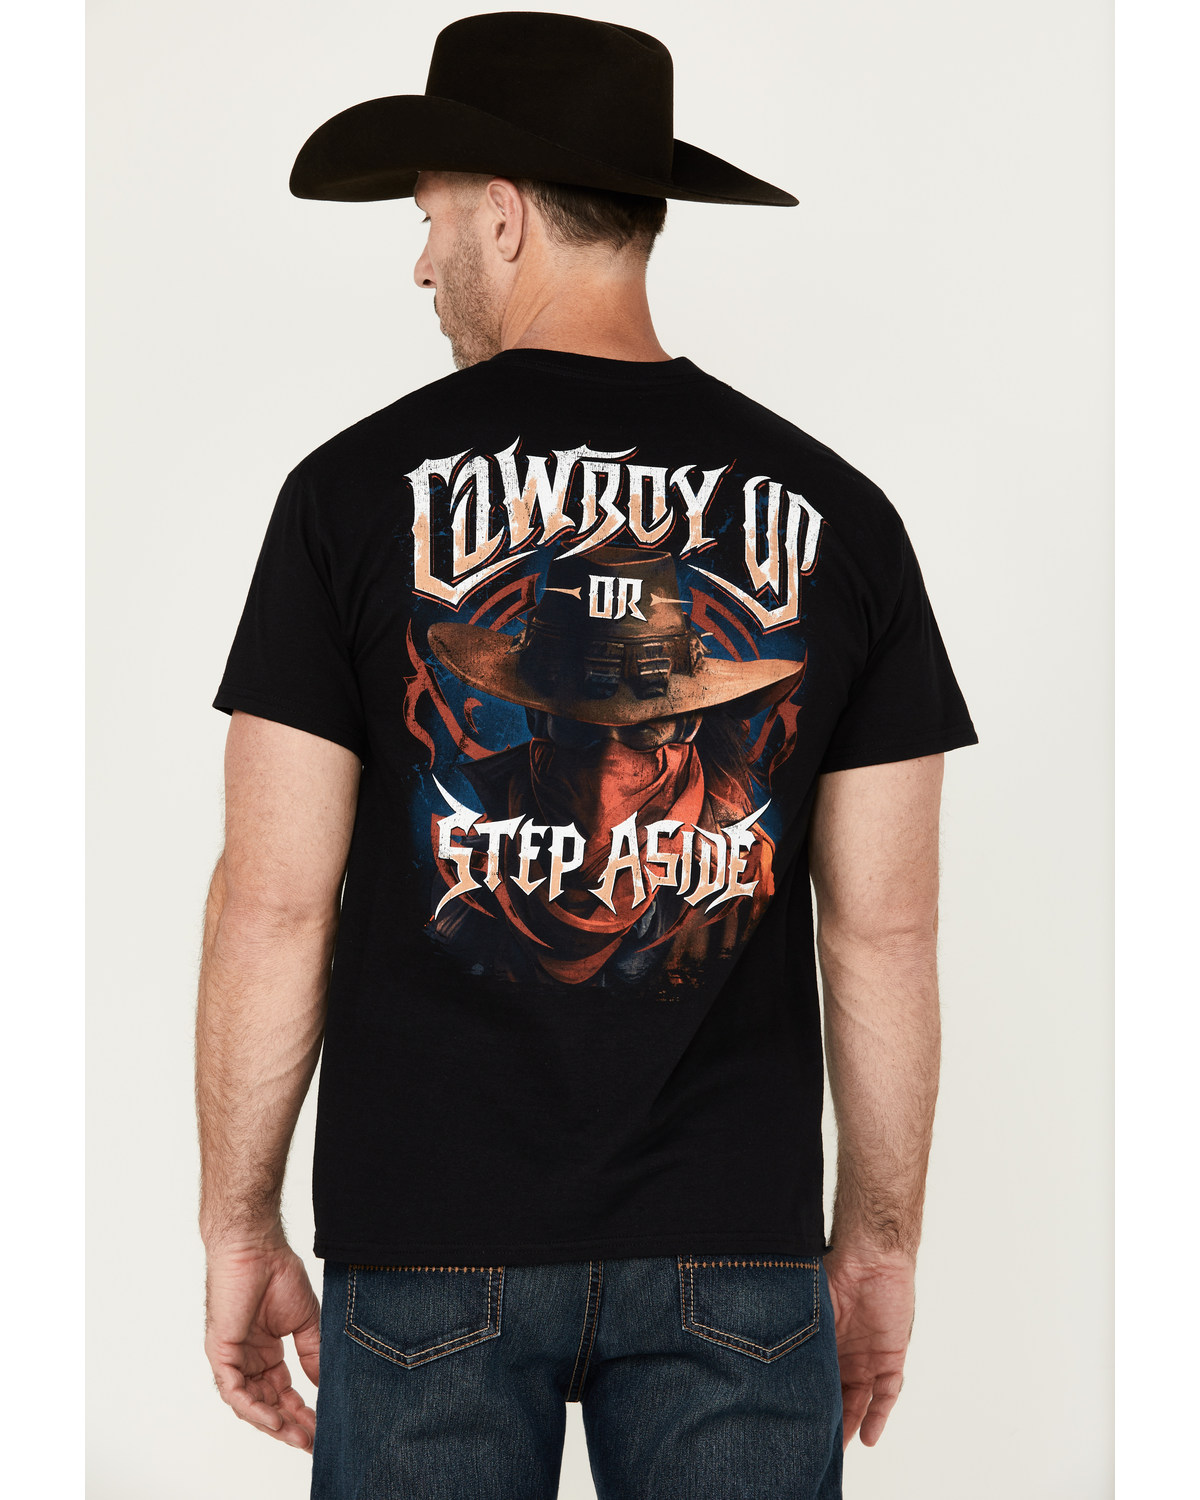 Cowboy Up Men's Step Aside Short Sleeve Graphic T-Shirt